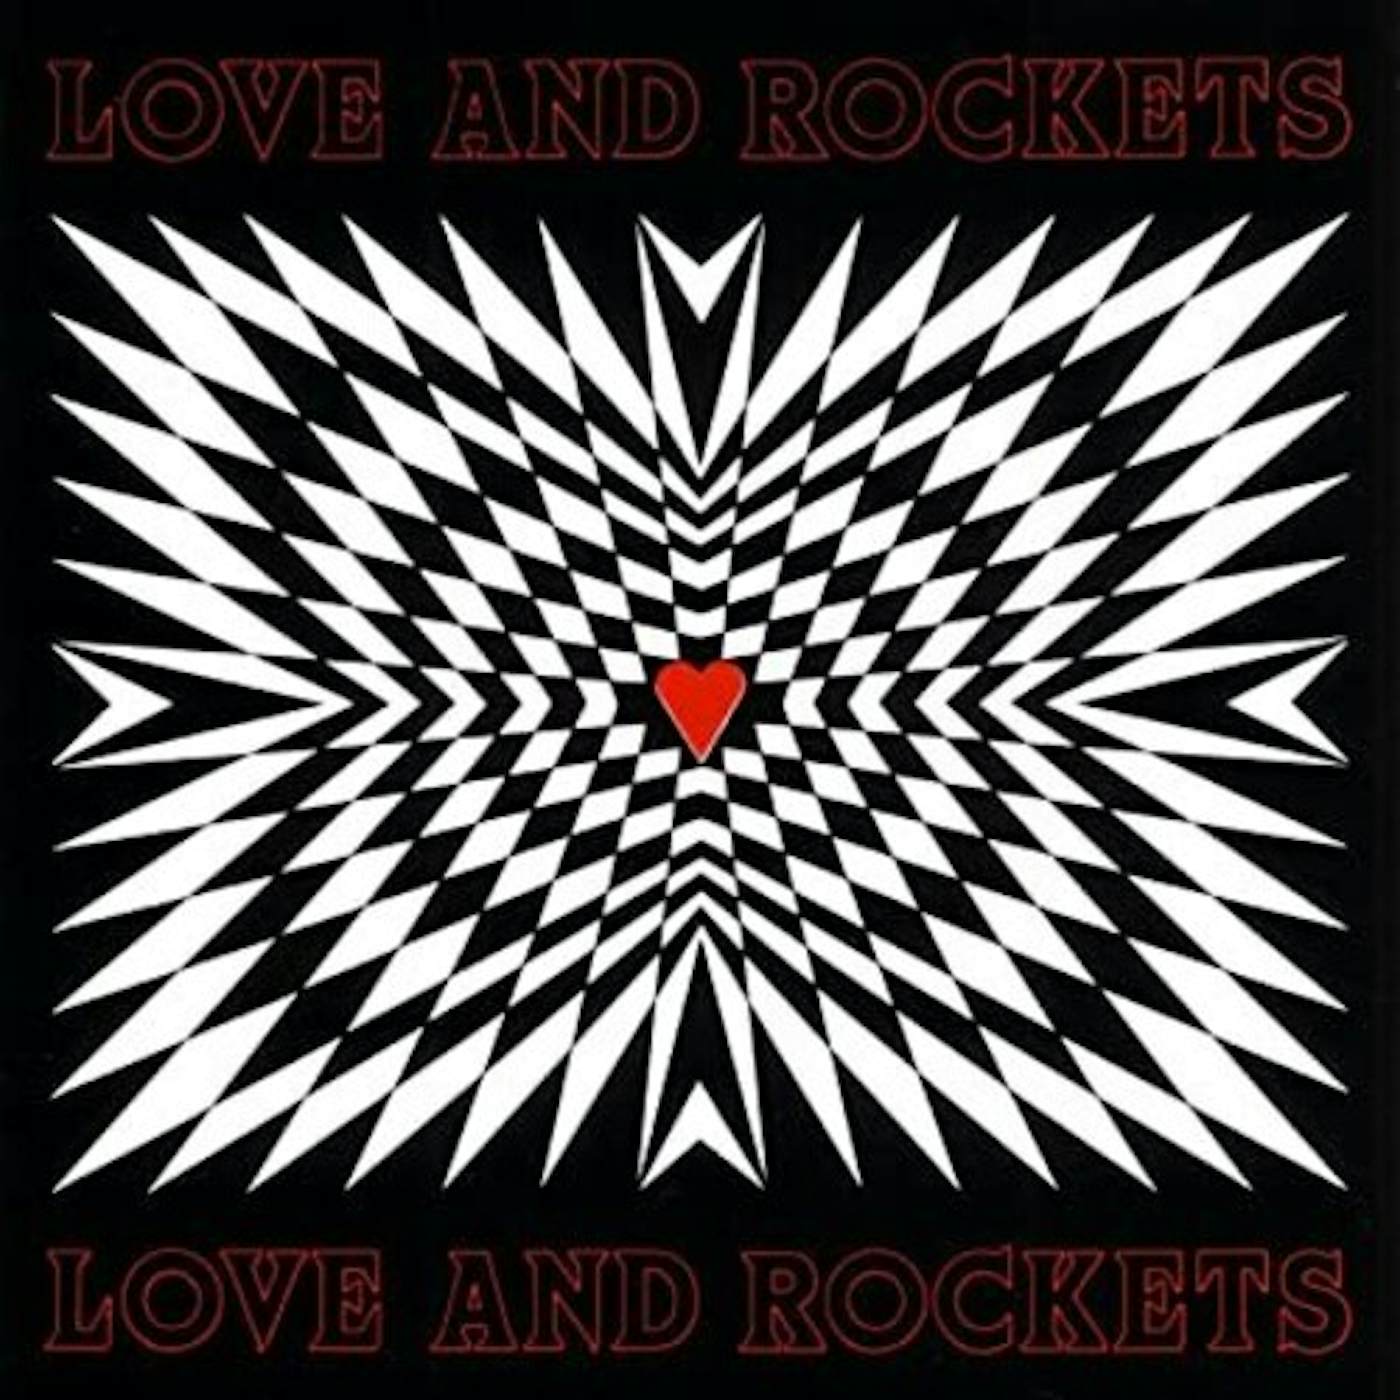 Love And Rockets Vinyl Record